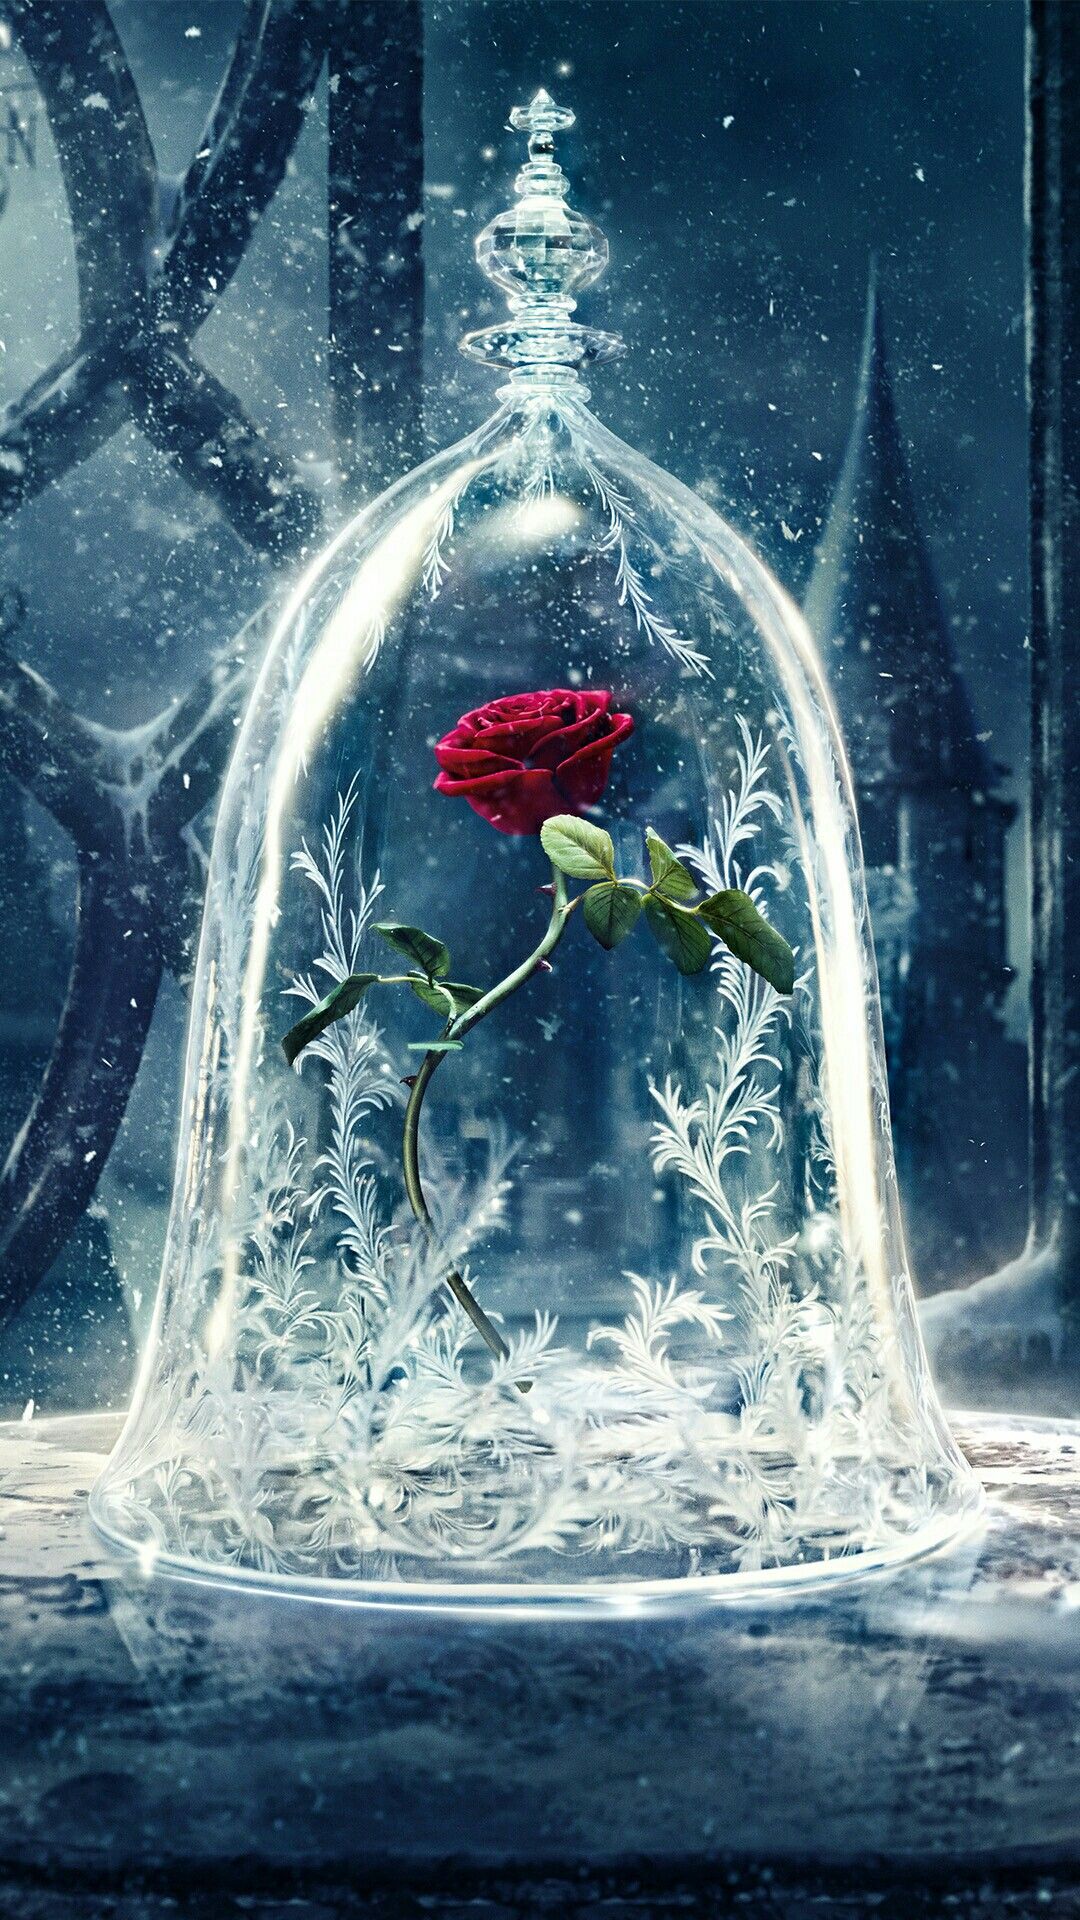 Disney Beauty And The Beast Rose Image Digital Art